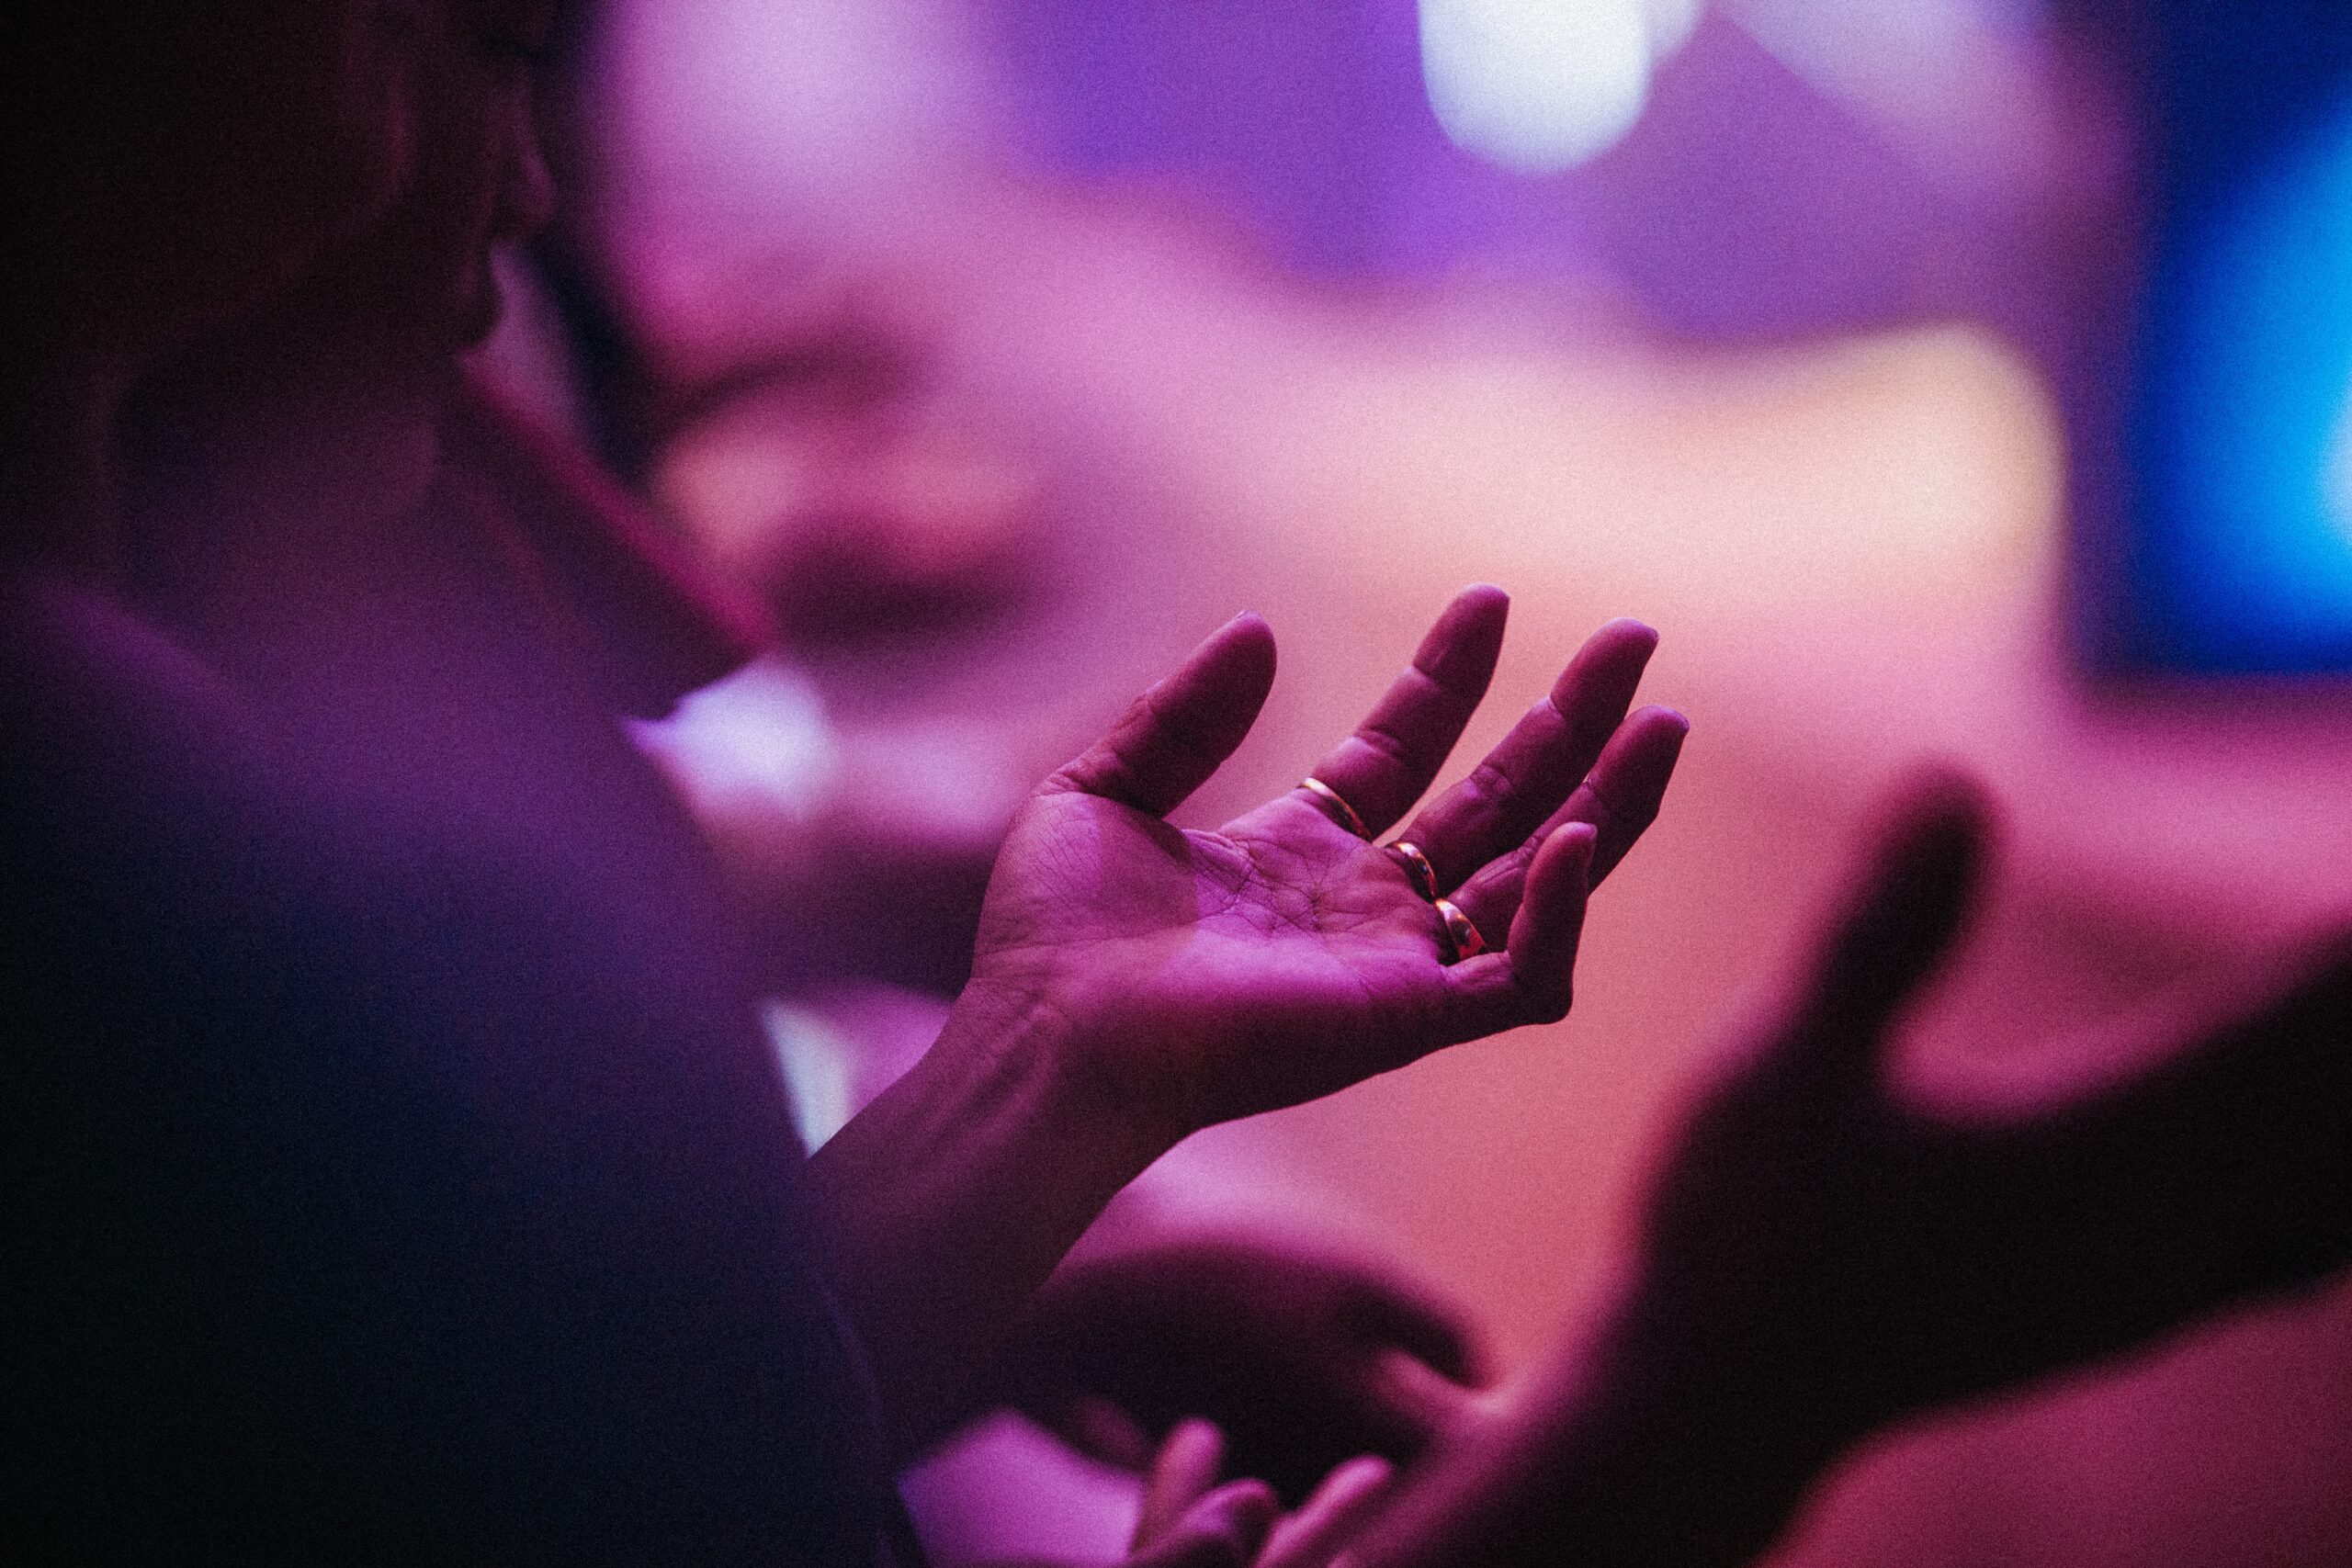 hands open in prayer | Photo by Lampos Aritonang on Unsplash